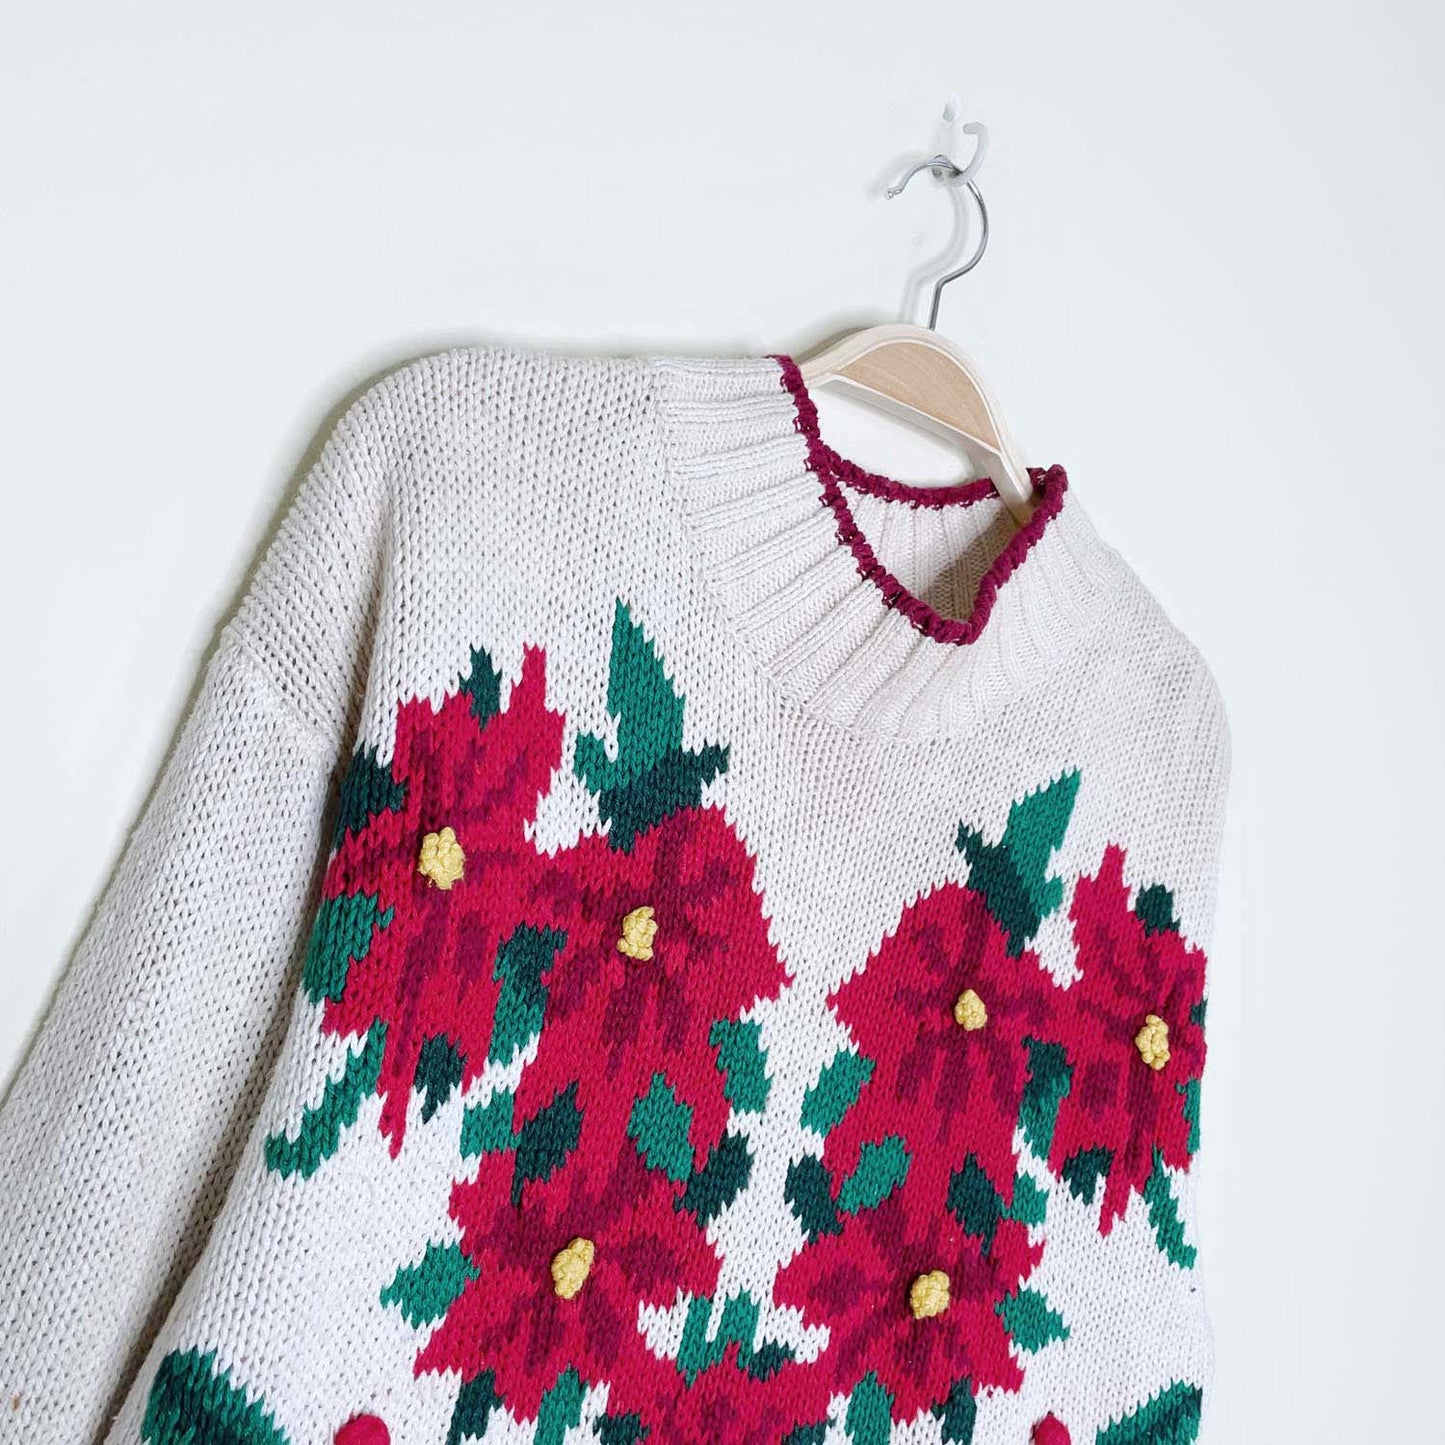 vintage nutcracker poinsettia knitted sweater - size medium